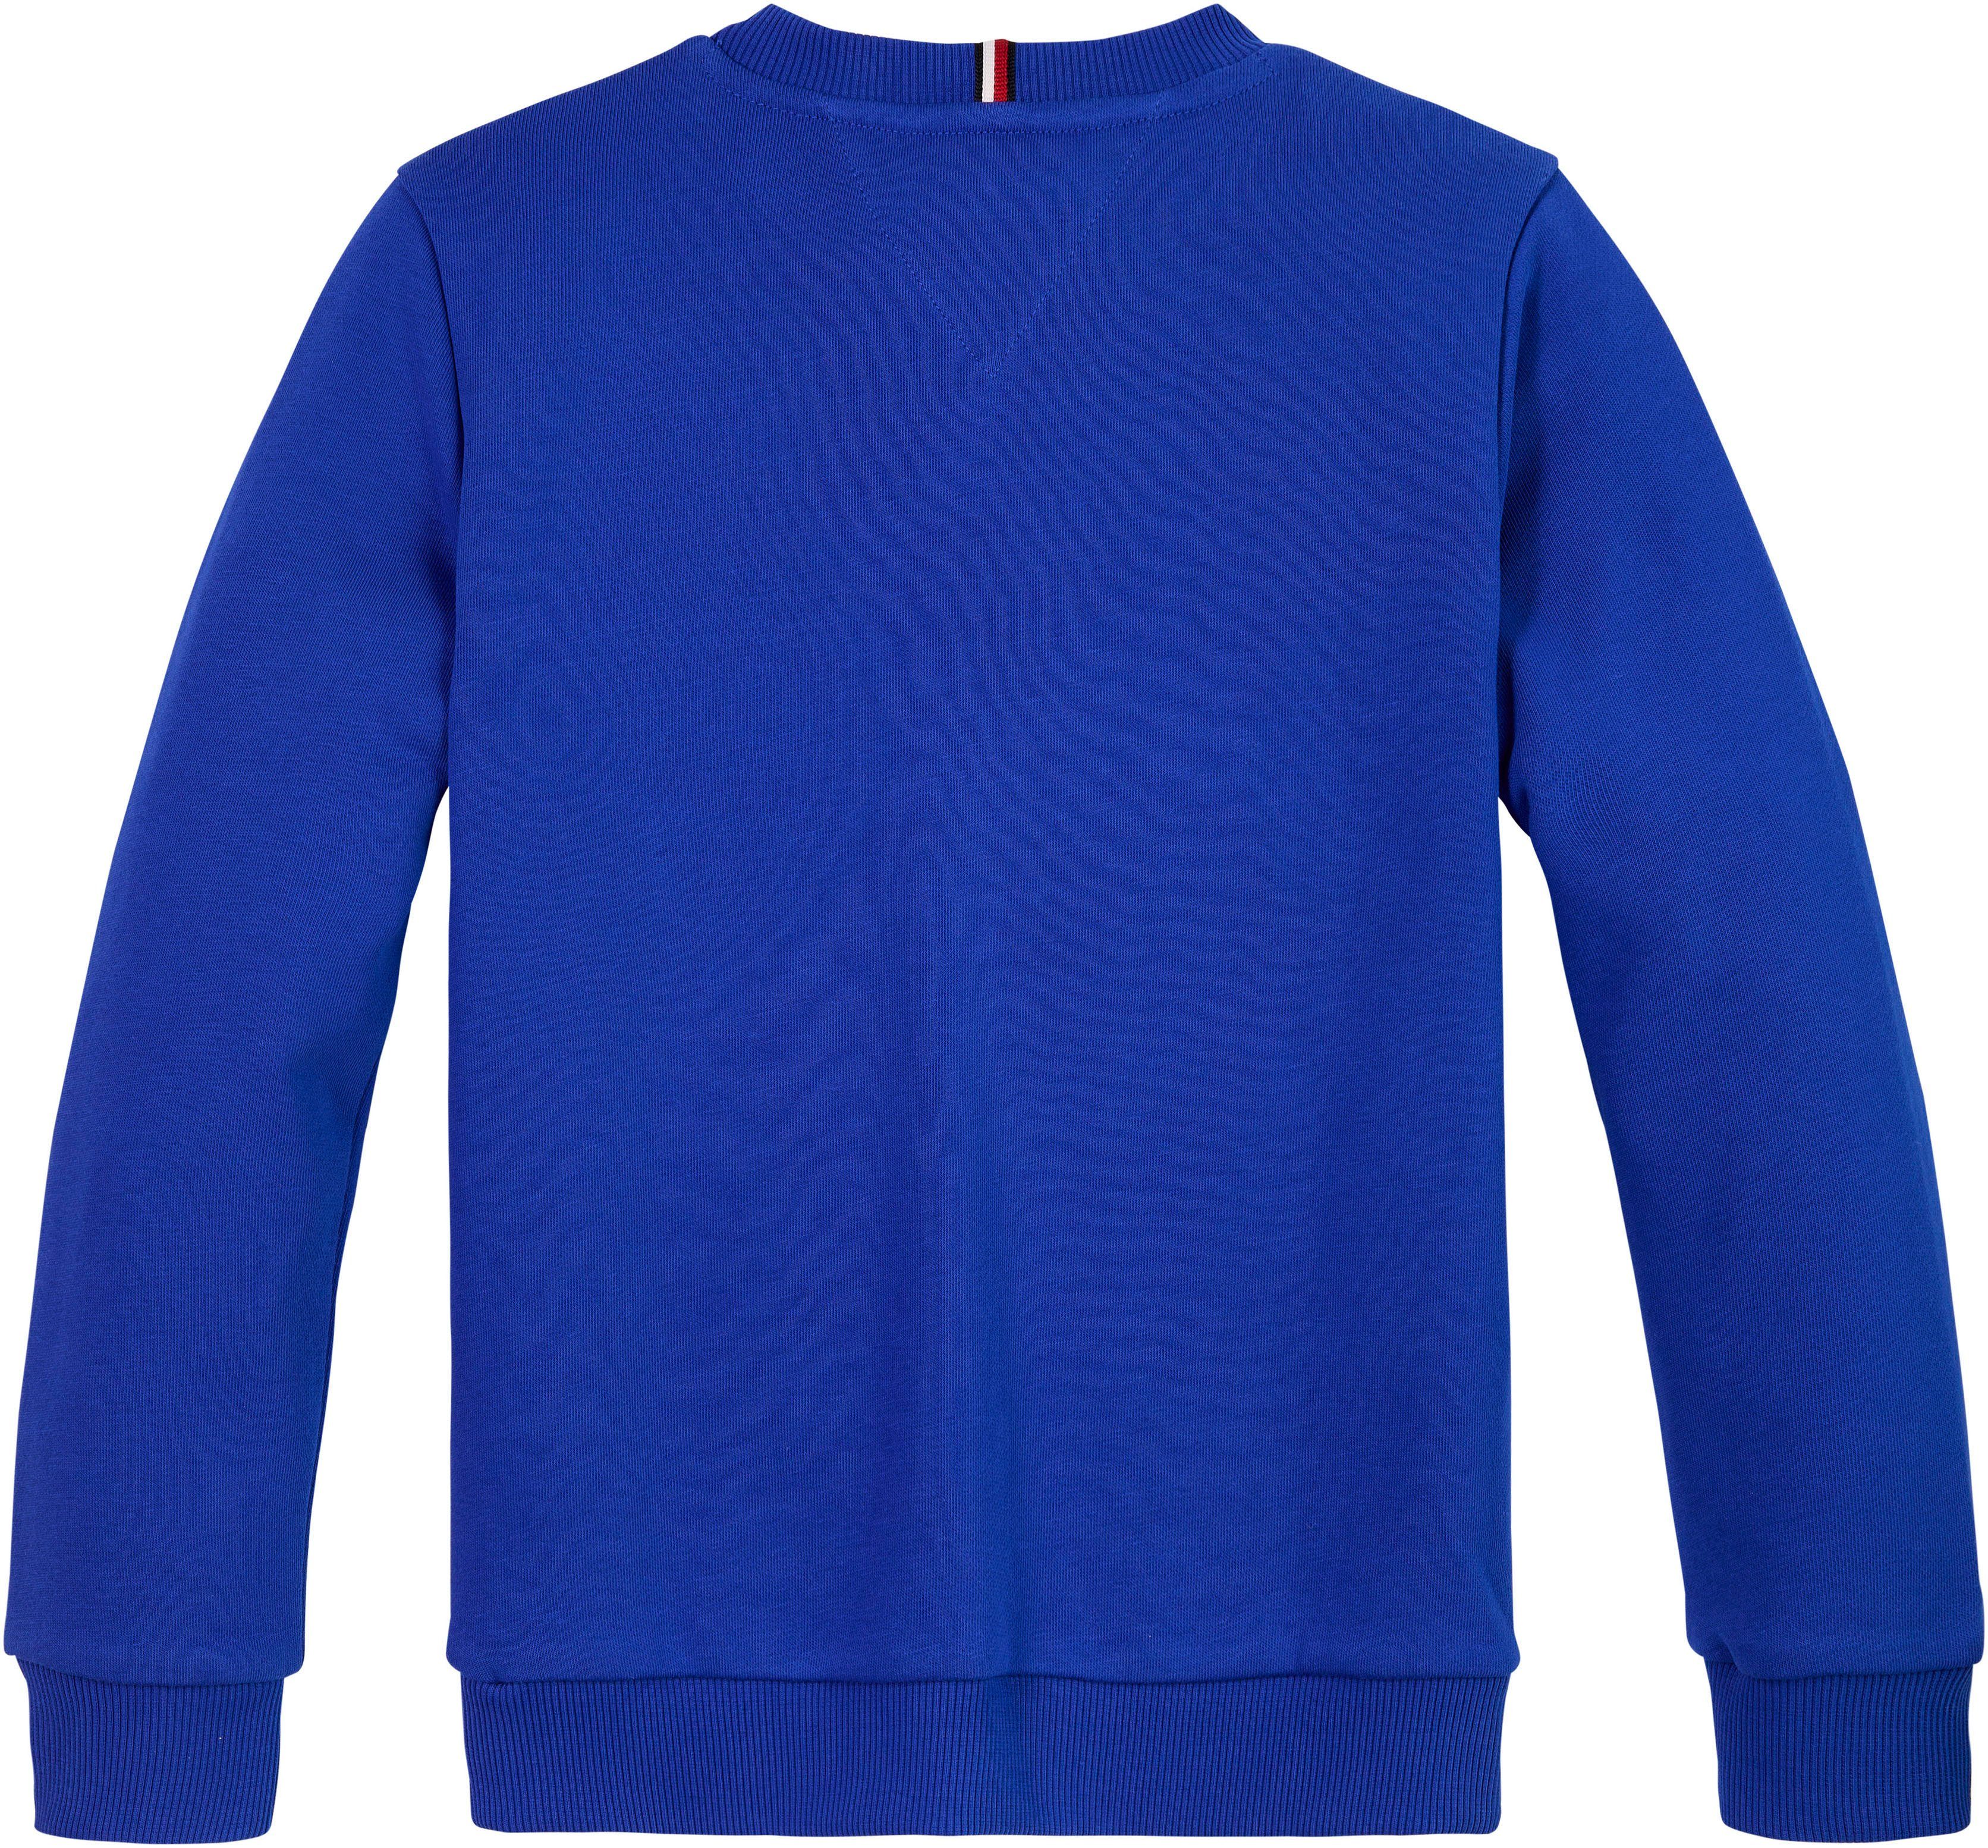 TH ultra Tommy großem LOGO Sweatshirt Hilfiger mit SWEATSHIRT blue Logo